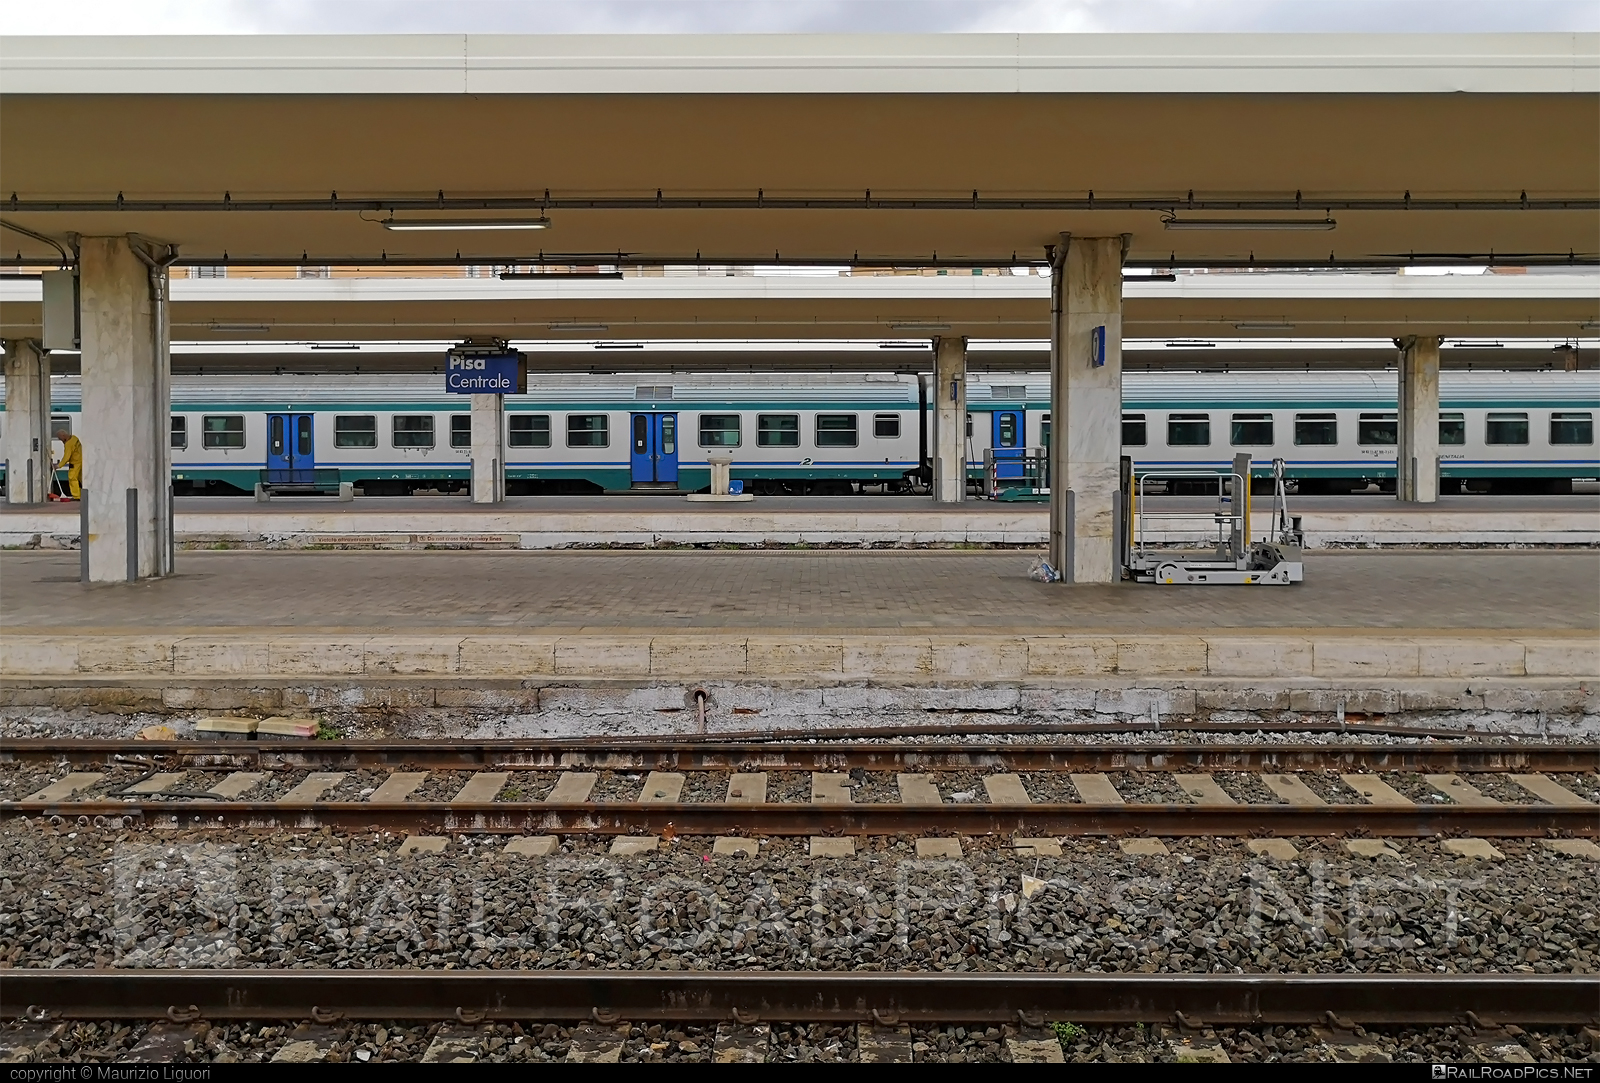 Pisa Centrale location overview #ferroviedellostato #fs #fsitaliane #pisaCentrale #pisaCentraleRailwayStation #pisaCentraleStation